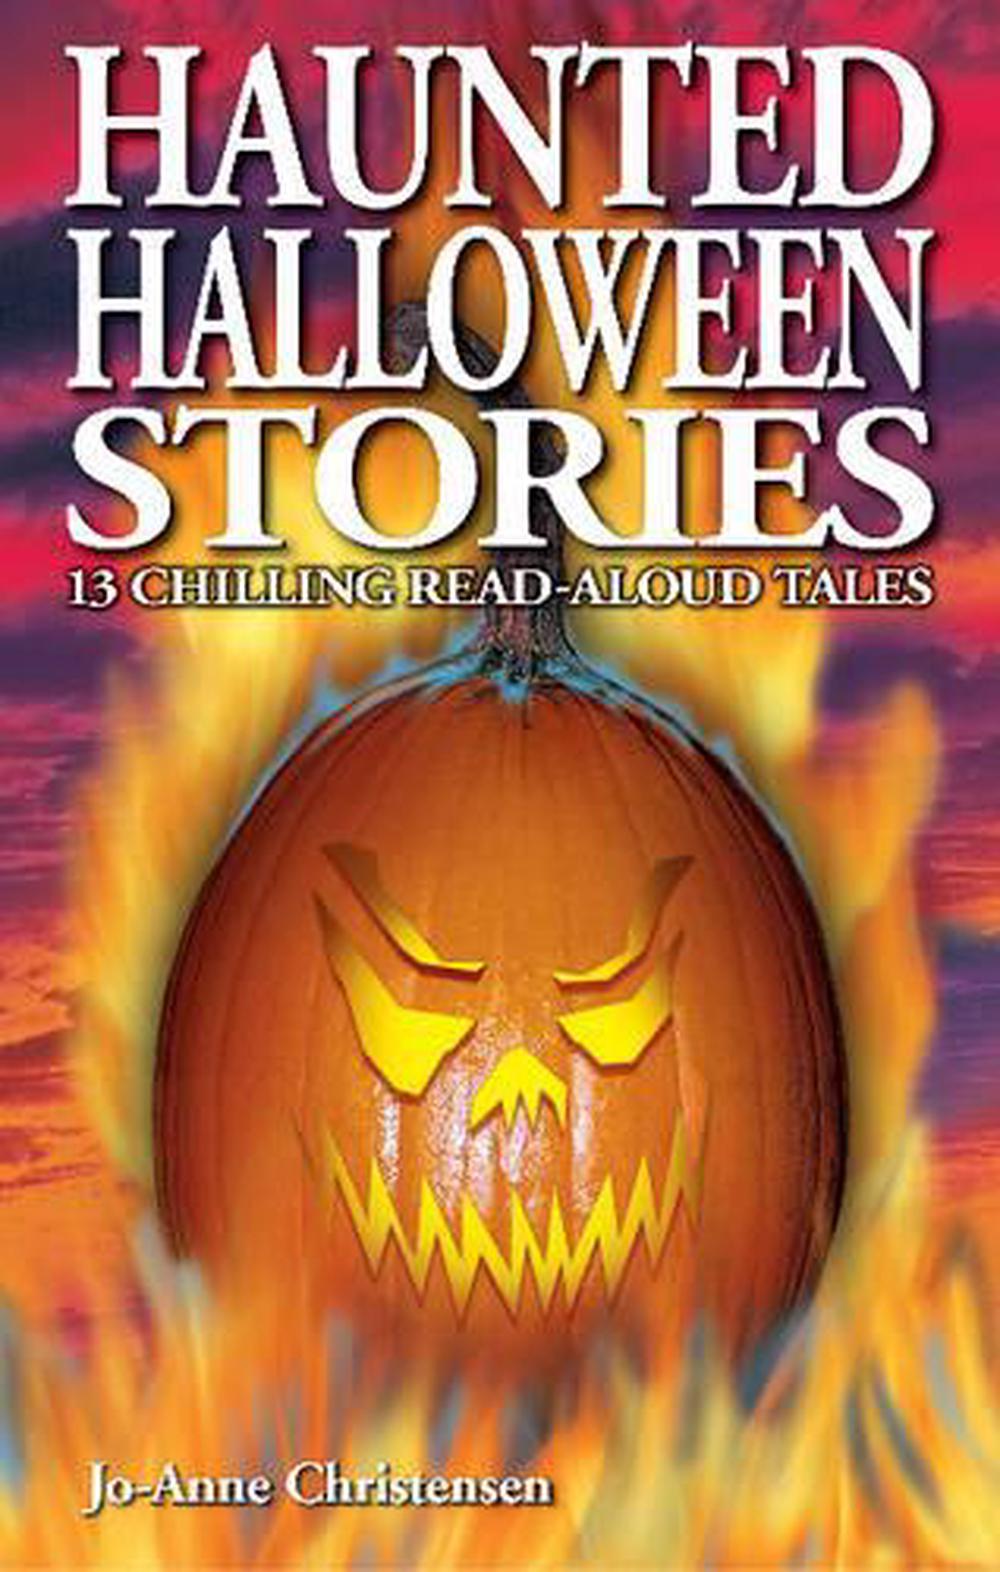 Haunted Halloween Stories: 13 Chilling Read-Aloud Tales by Jo-Anne ...